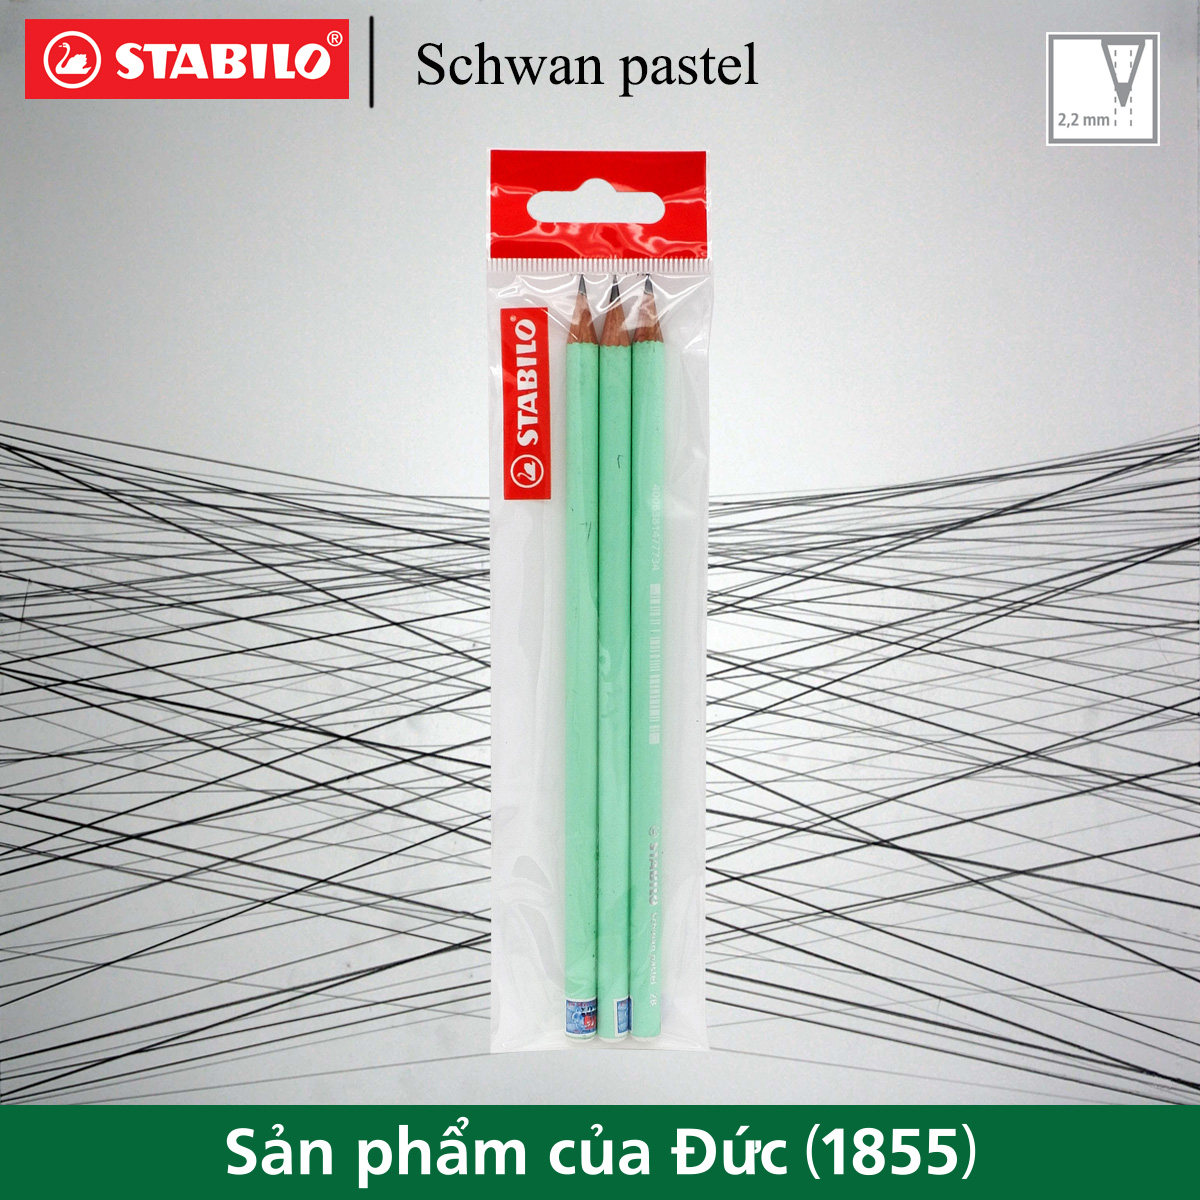 Bộ 3 bút chì gỗ STABILO Schwan Pastel 421 2B